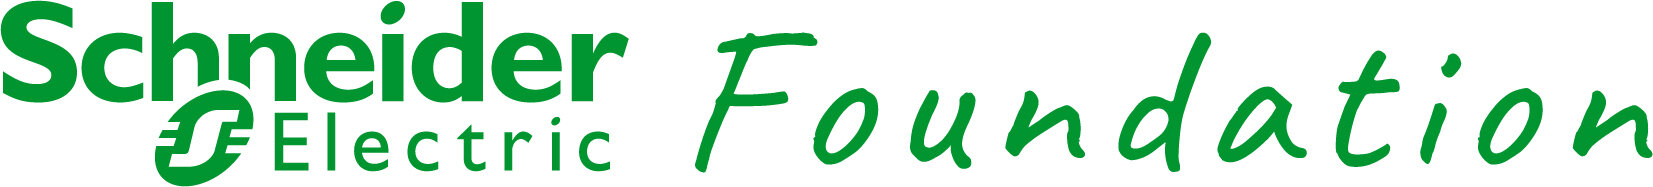 SE_Foundation_Logo_Horizontal_RGB_Green.jpg